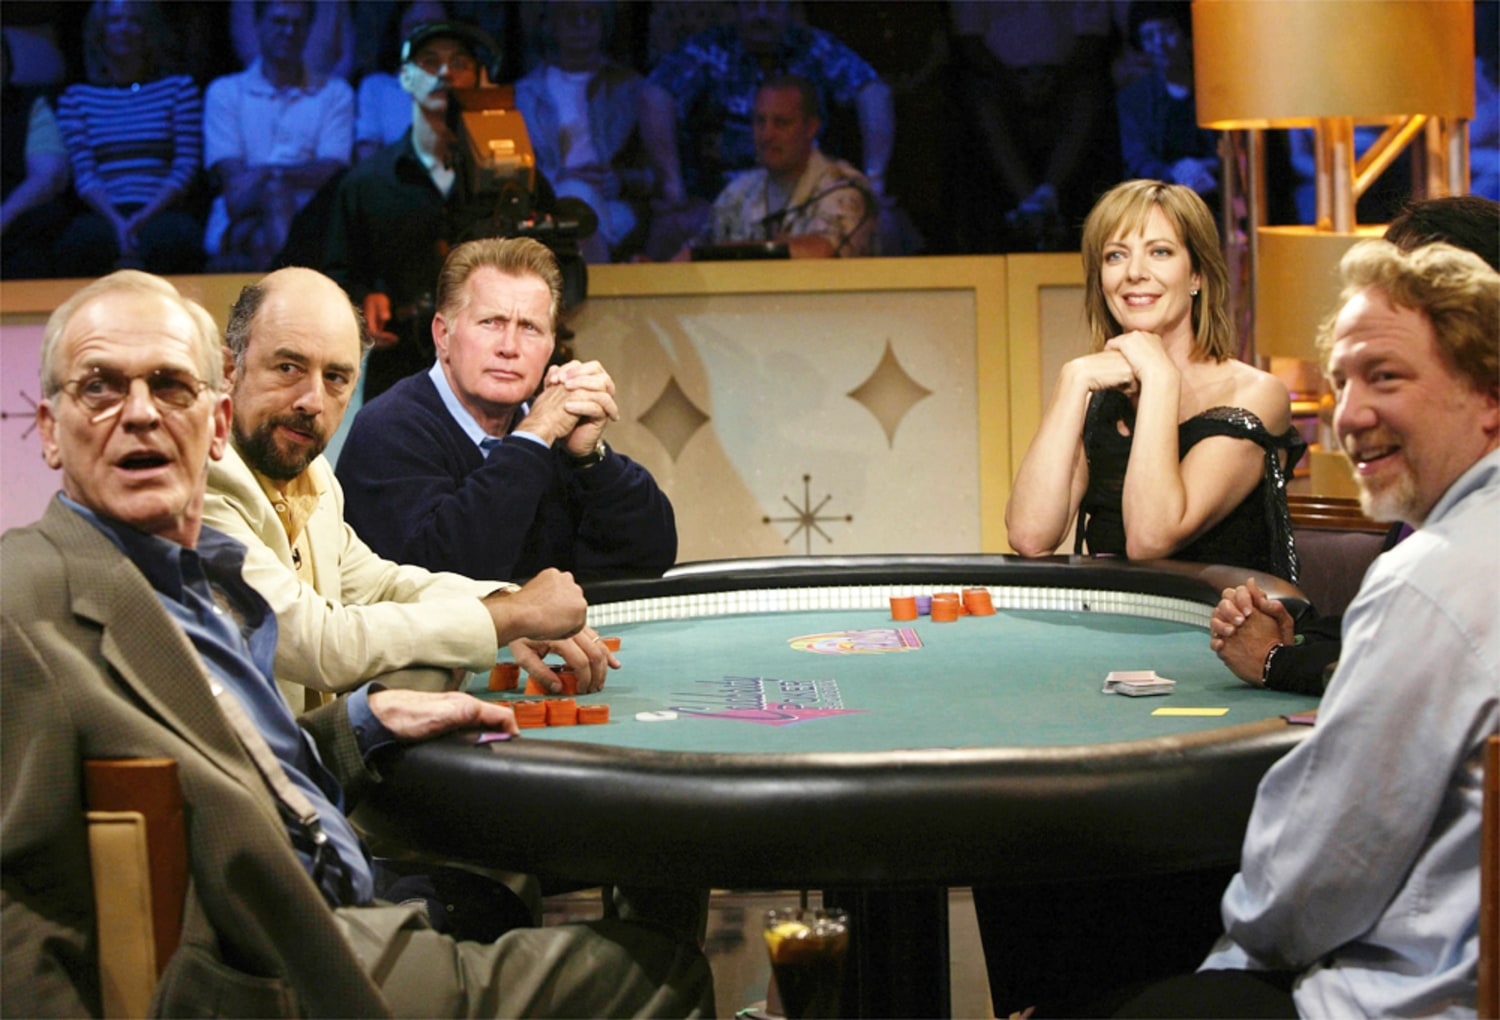 Celebrity poker the new TV trend?